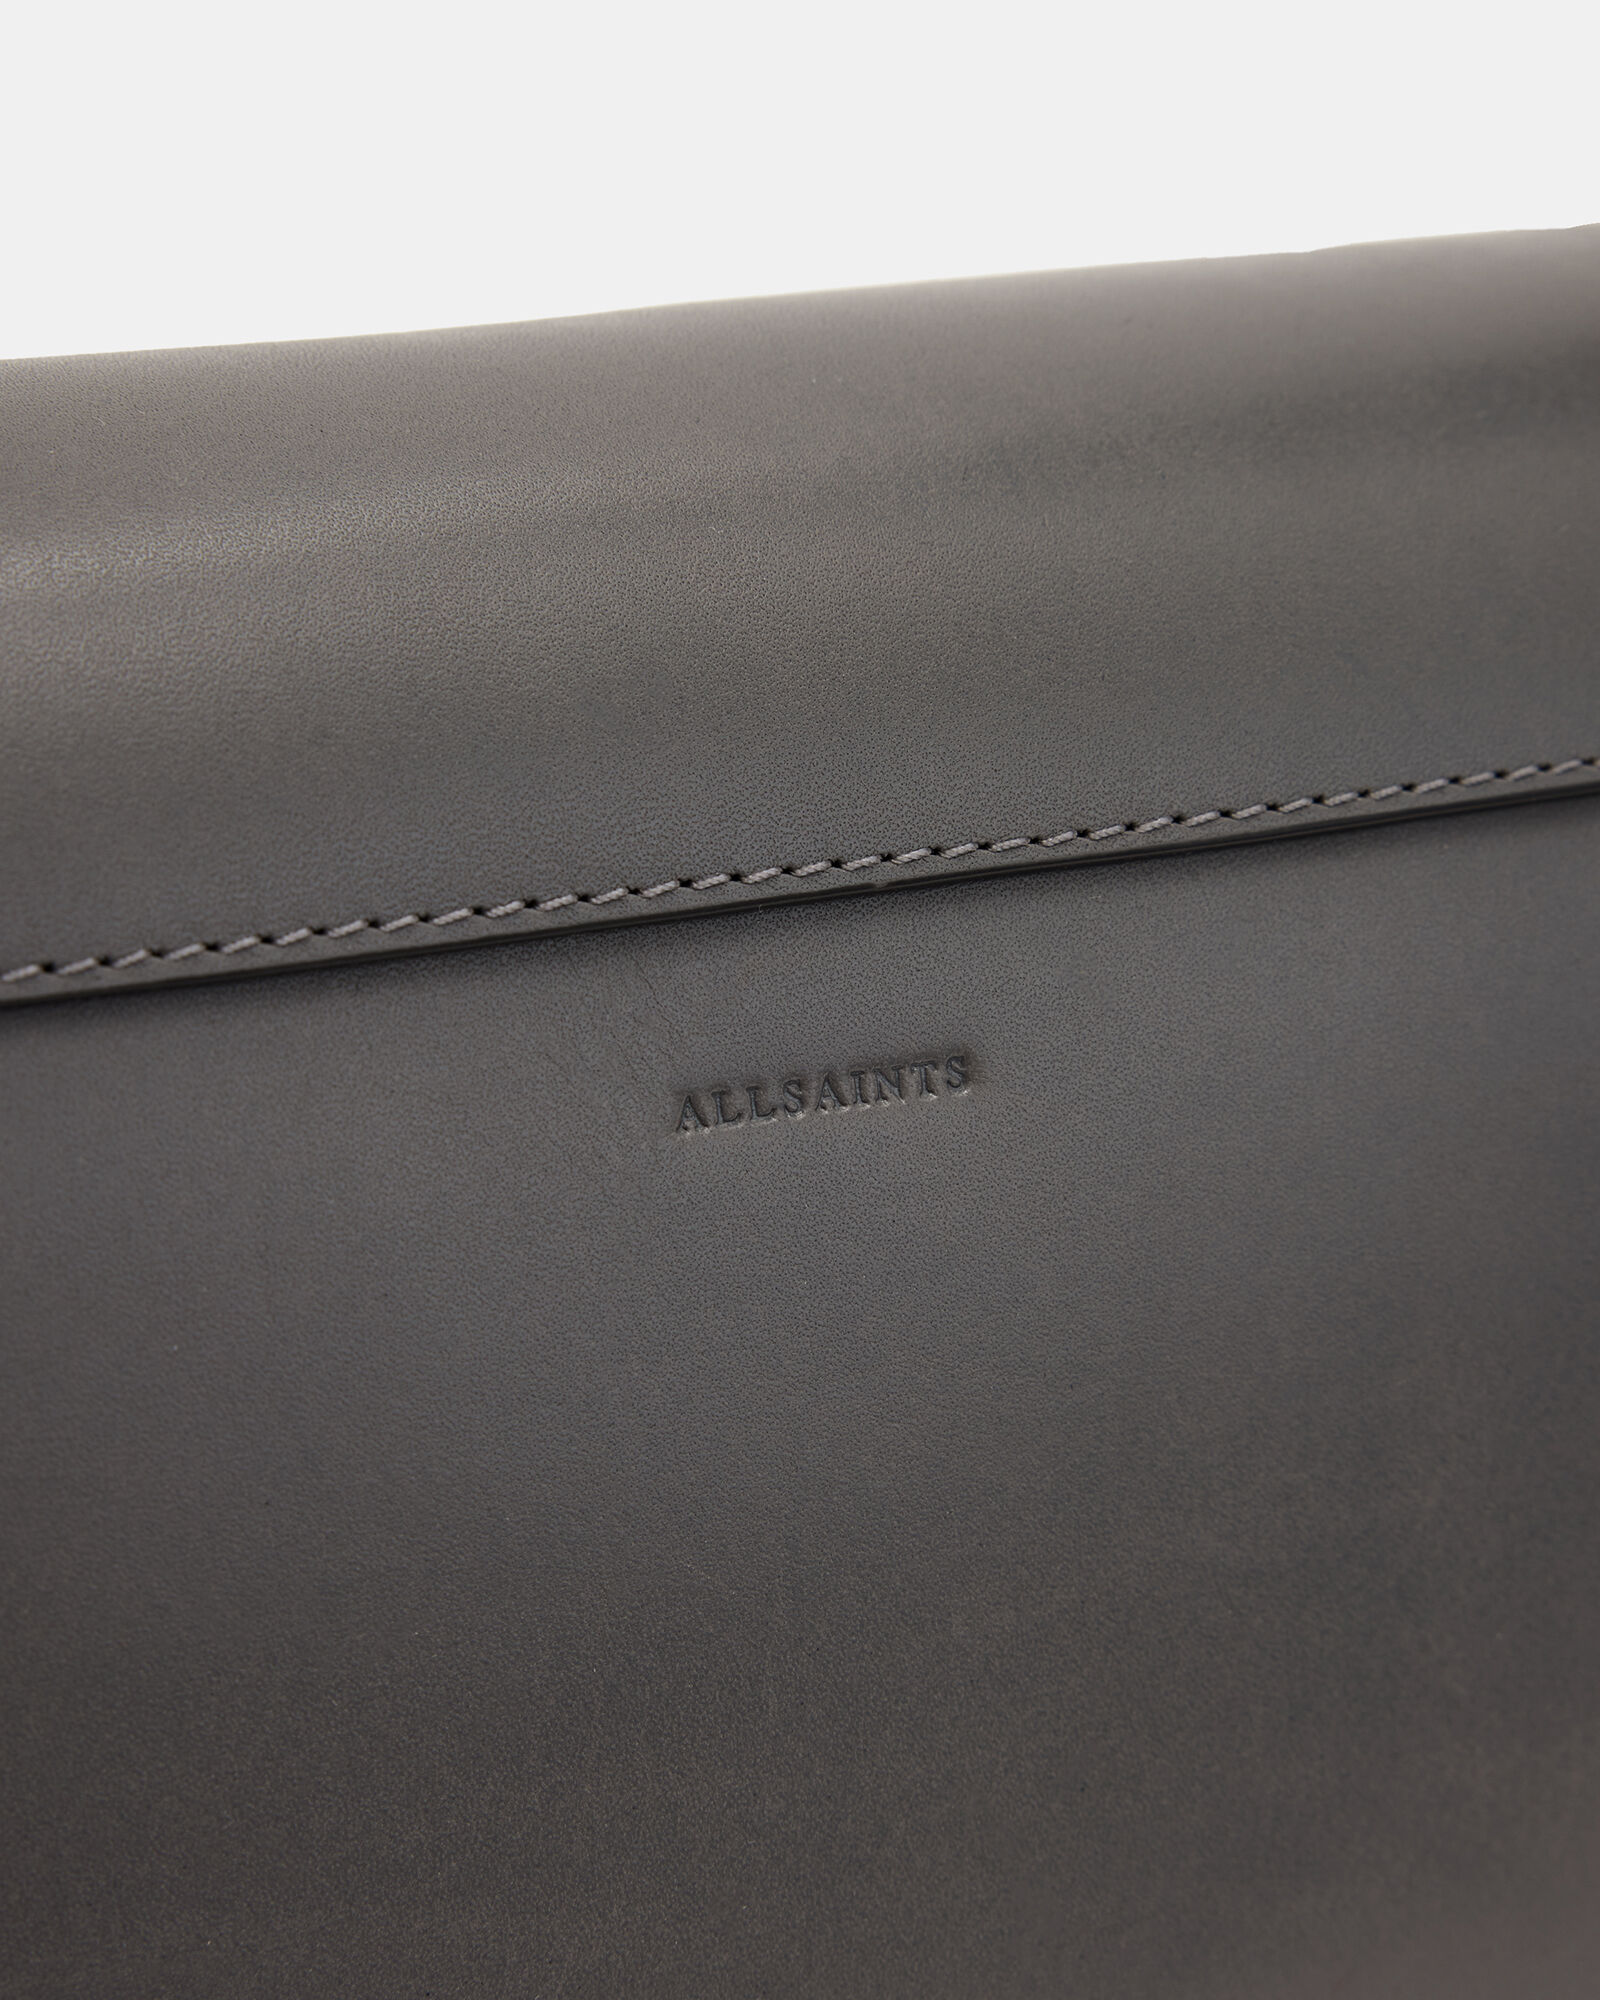 Celeste Leather Crossbody Bag